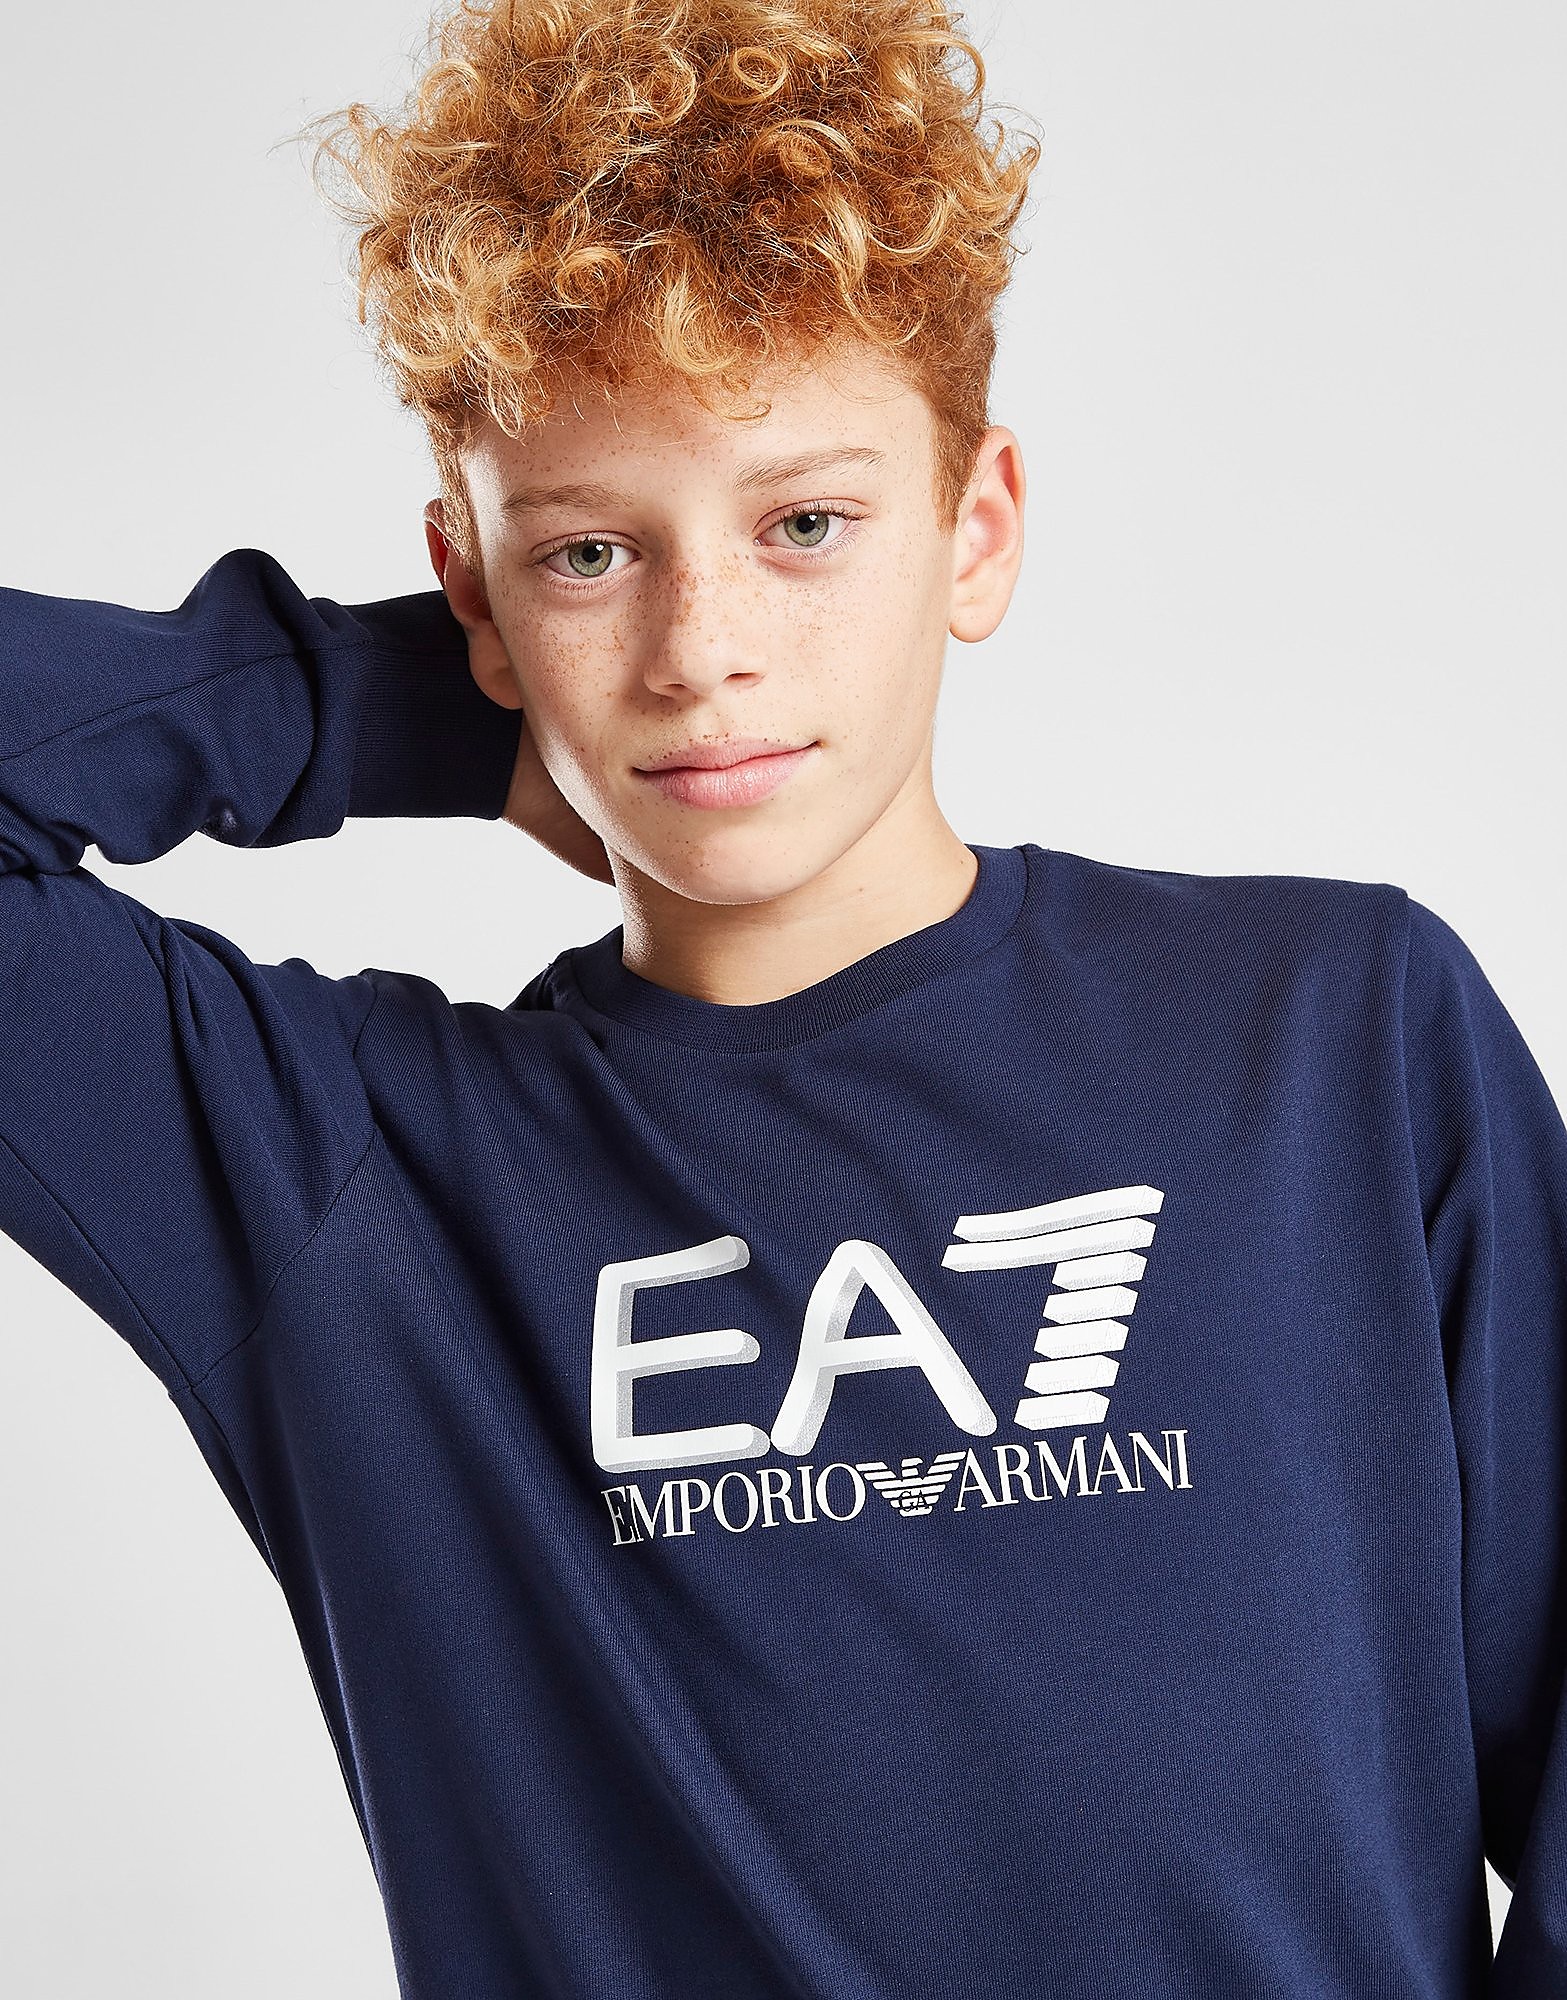 

Emporio Armani EA7 Visibility Crew Sweatshirt Junior - Blue - Kids, Blue